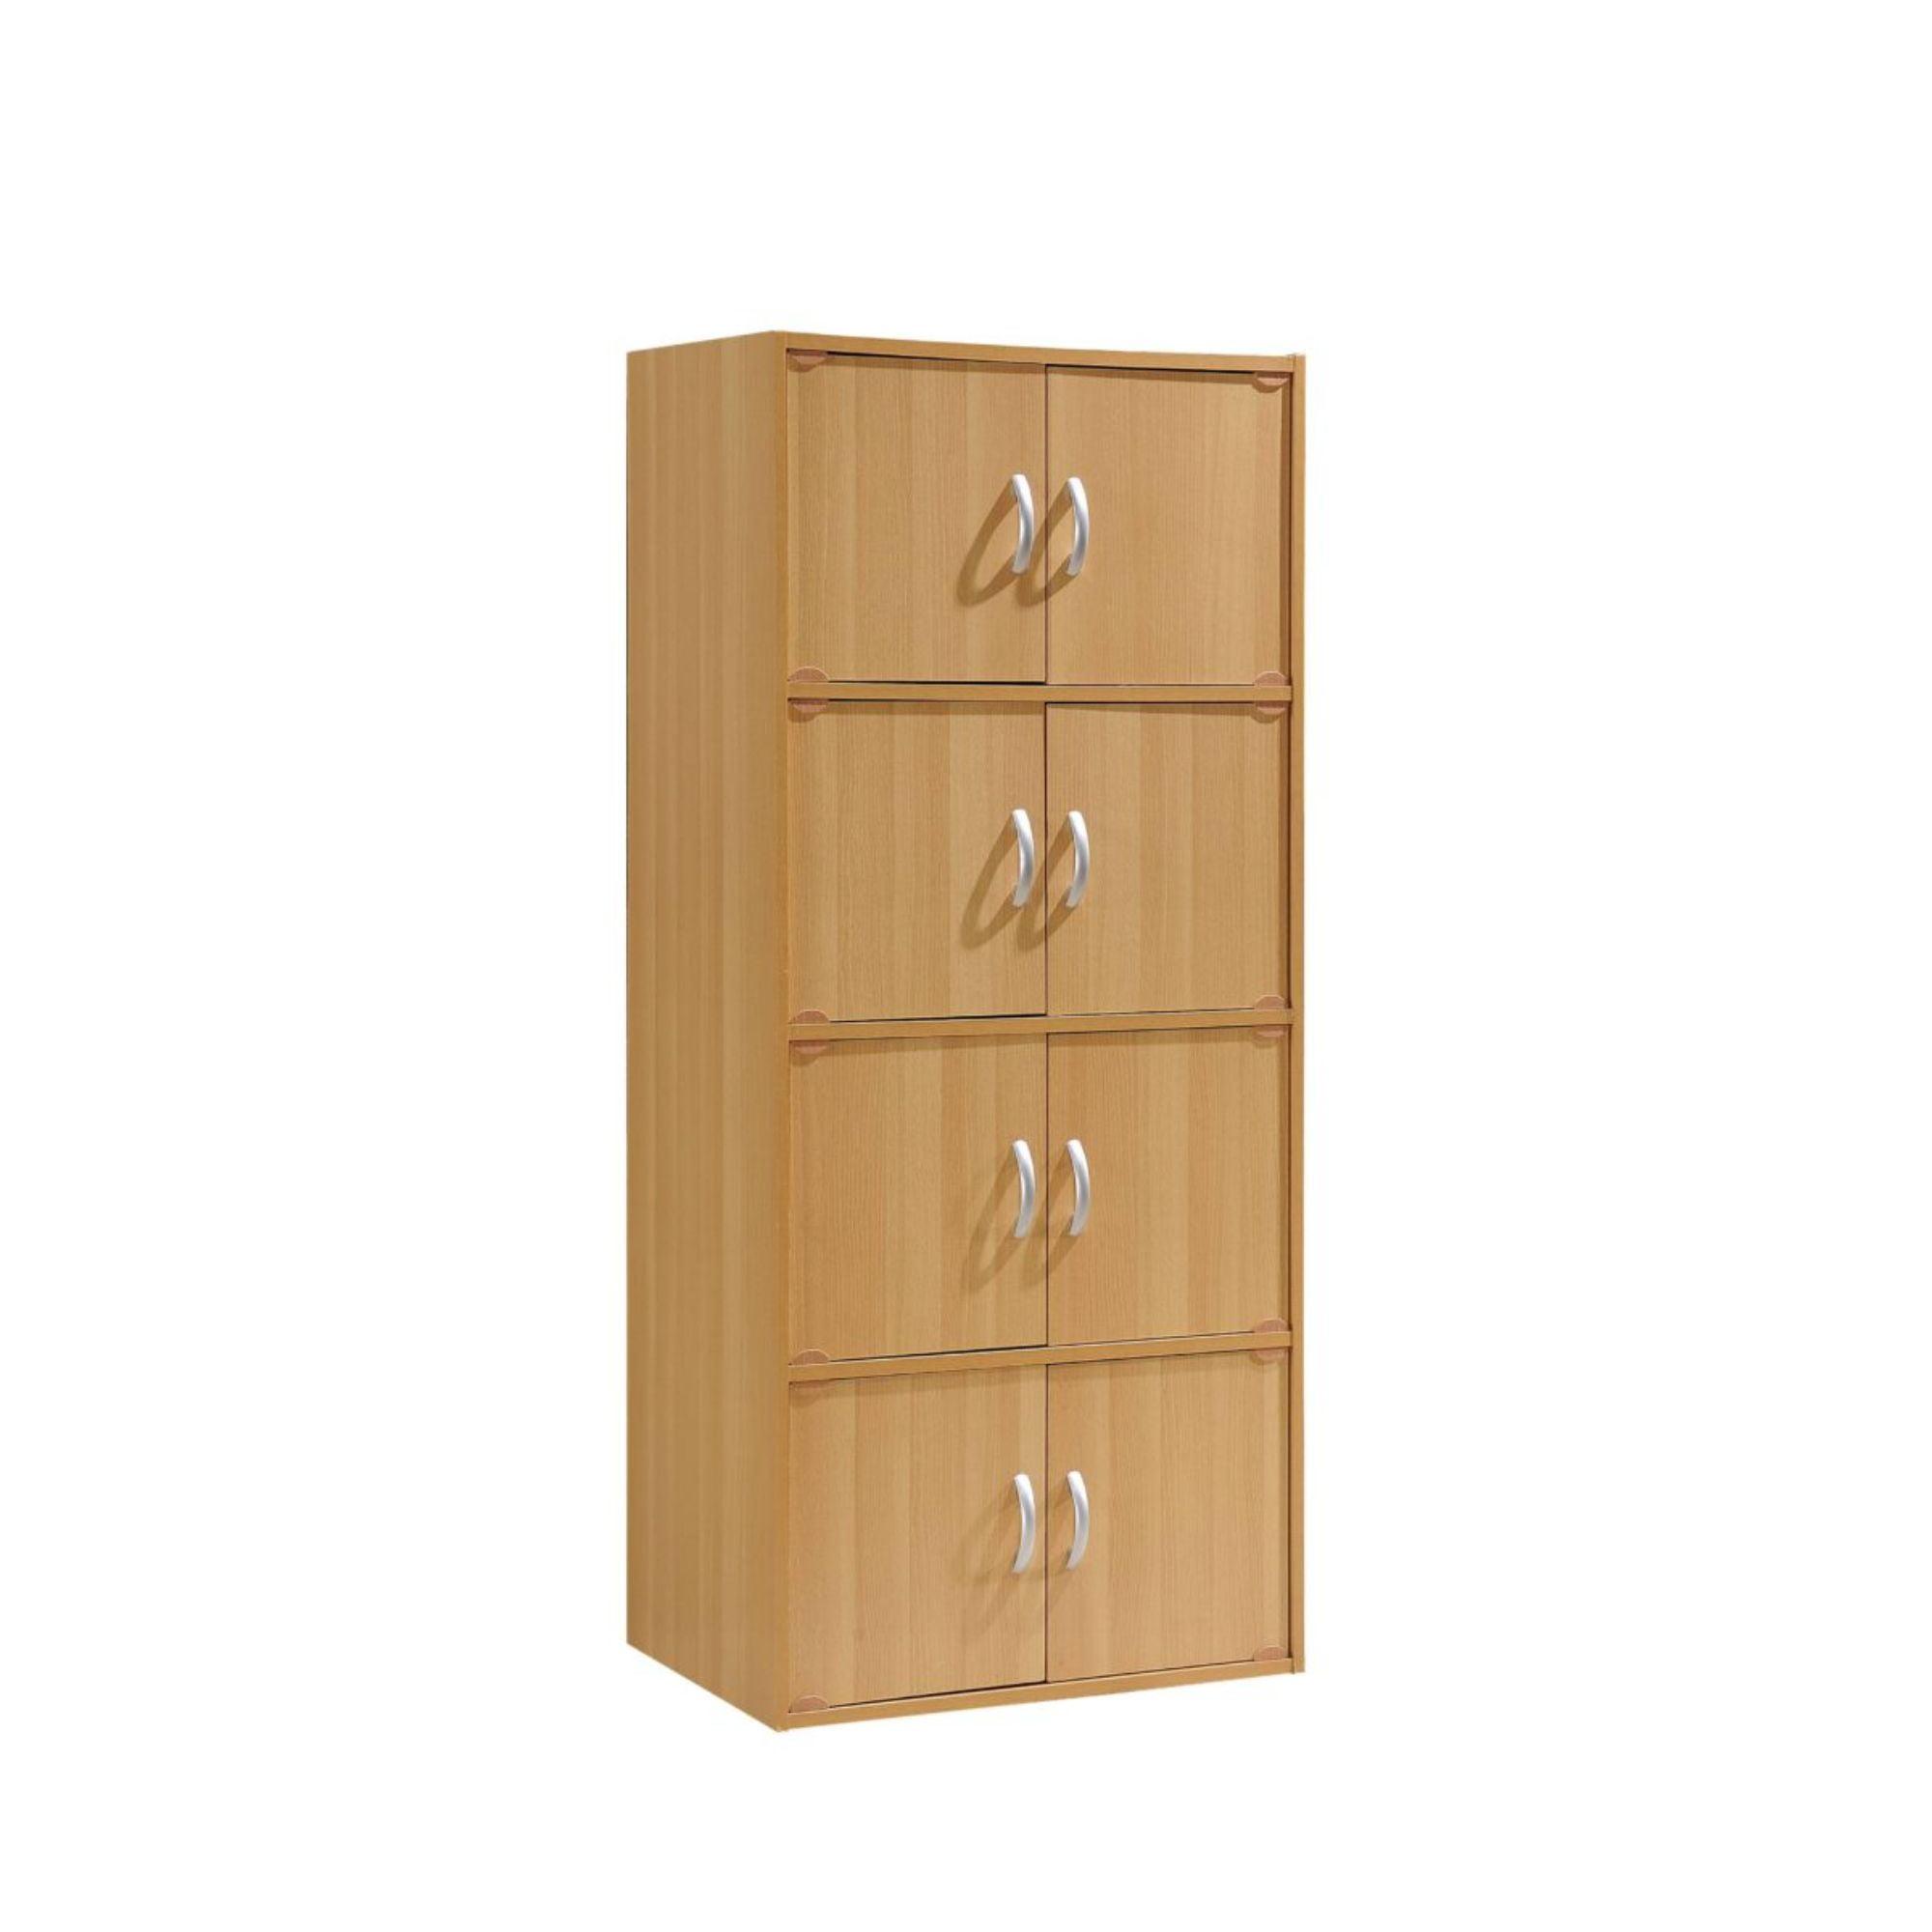 Slimline Beech Beige Multi-Functional Bookcase Cabinet with Doors